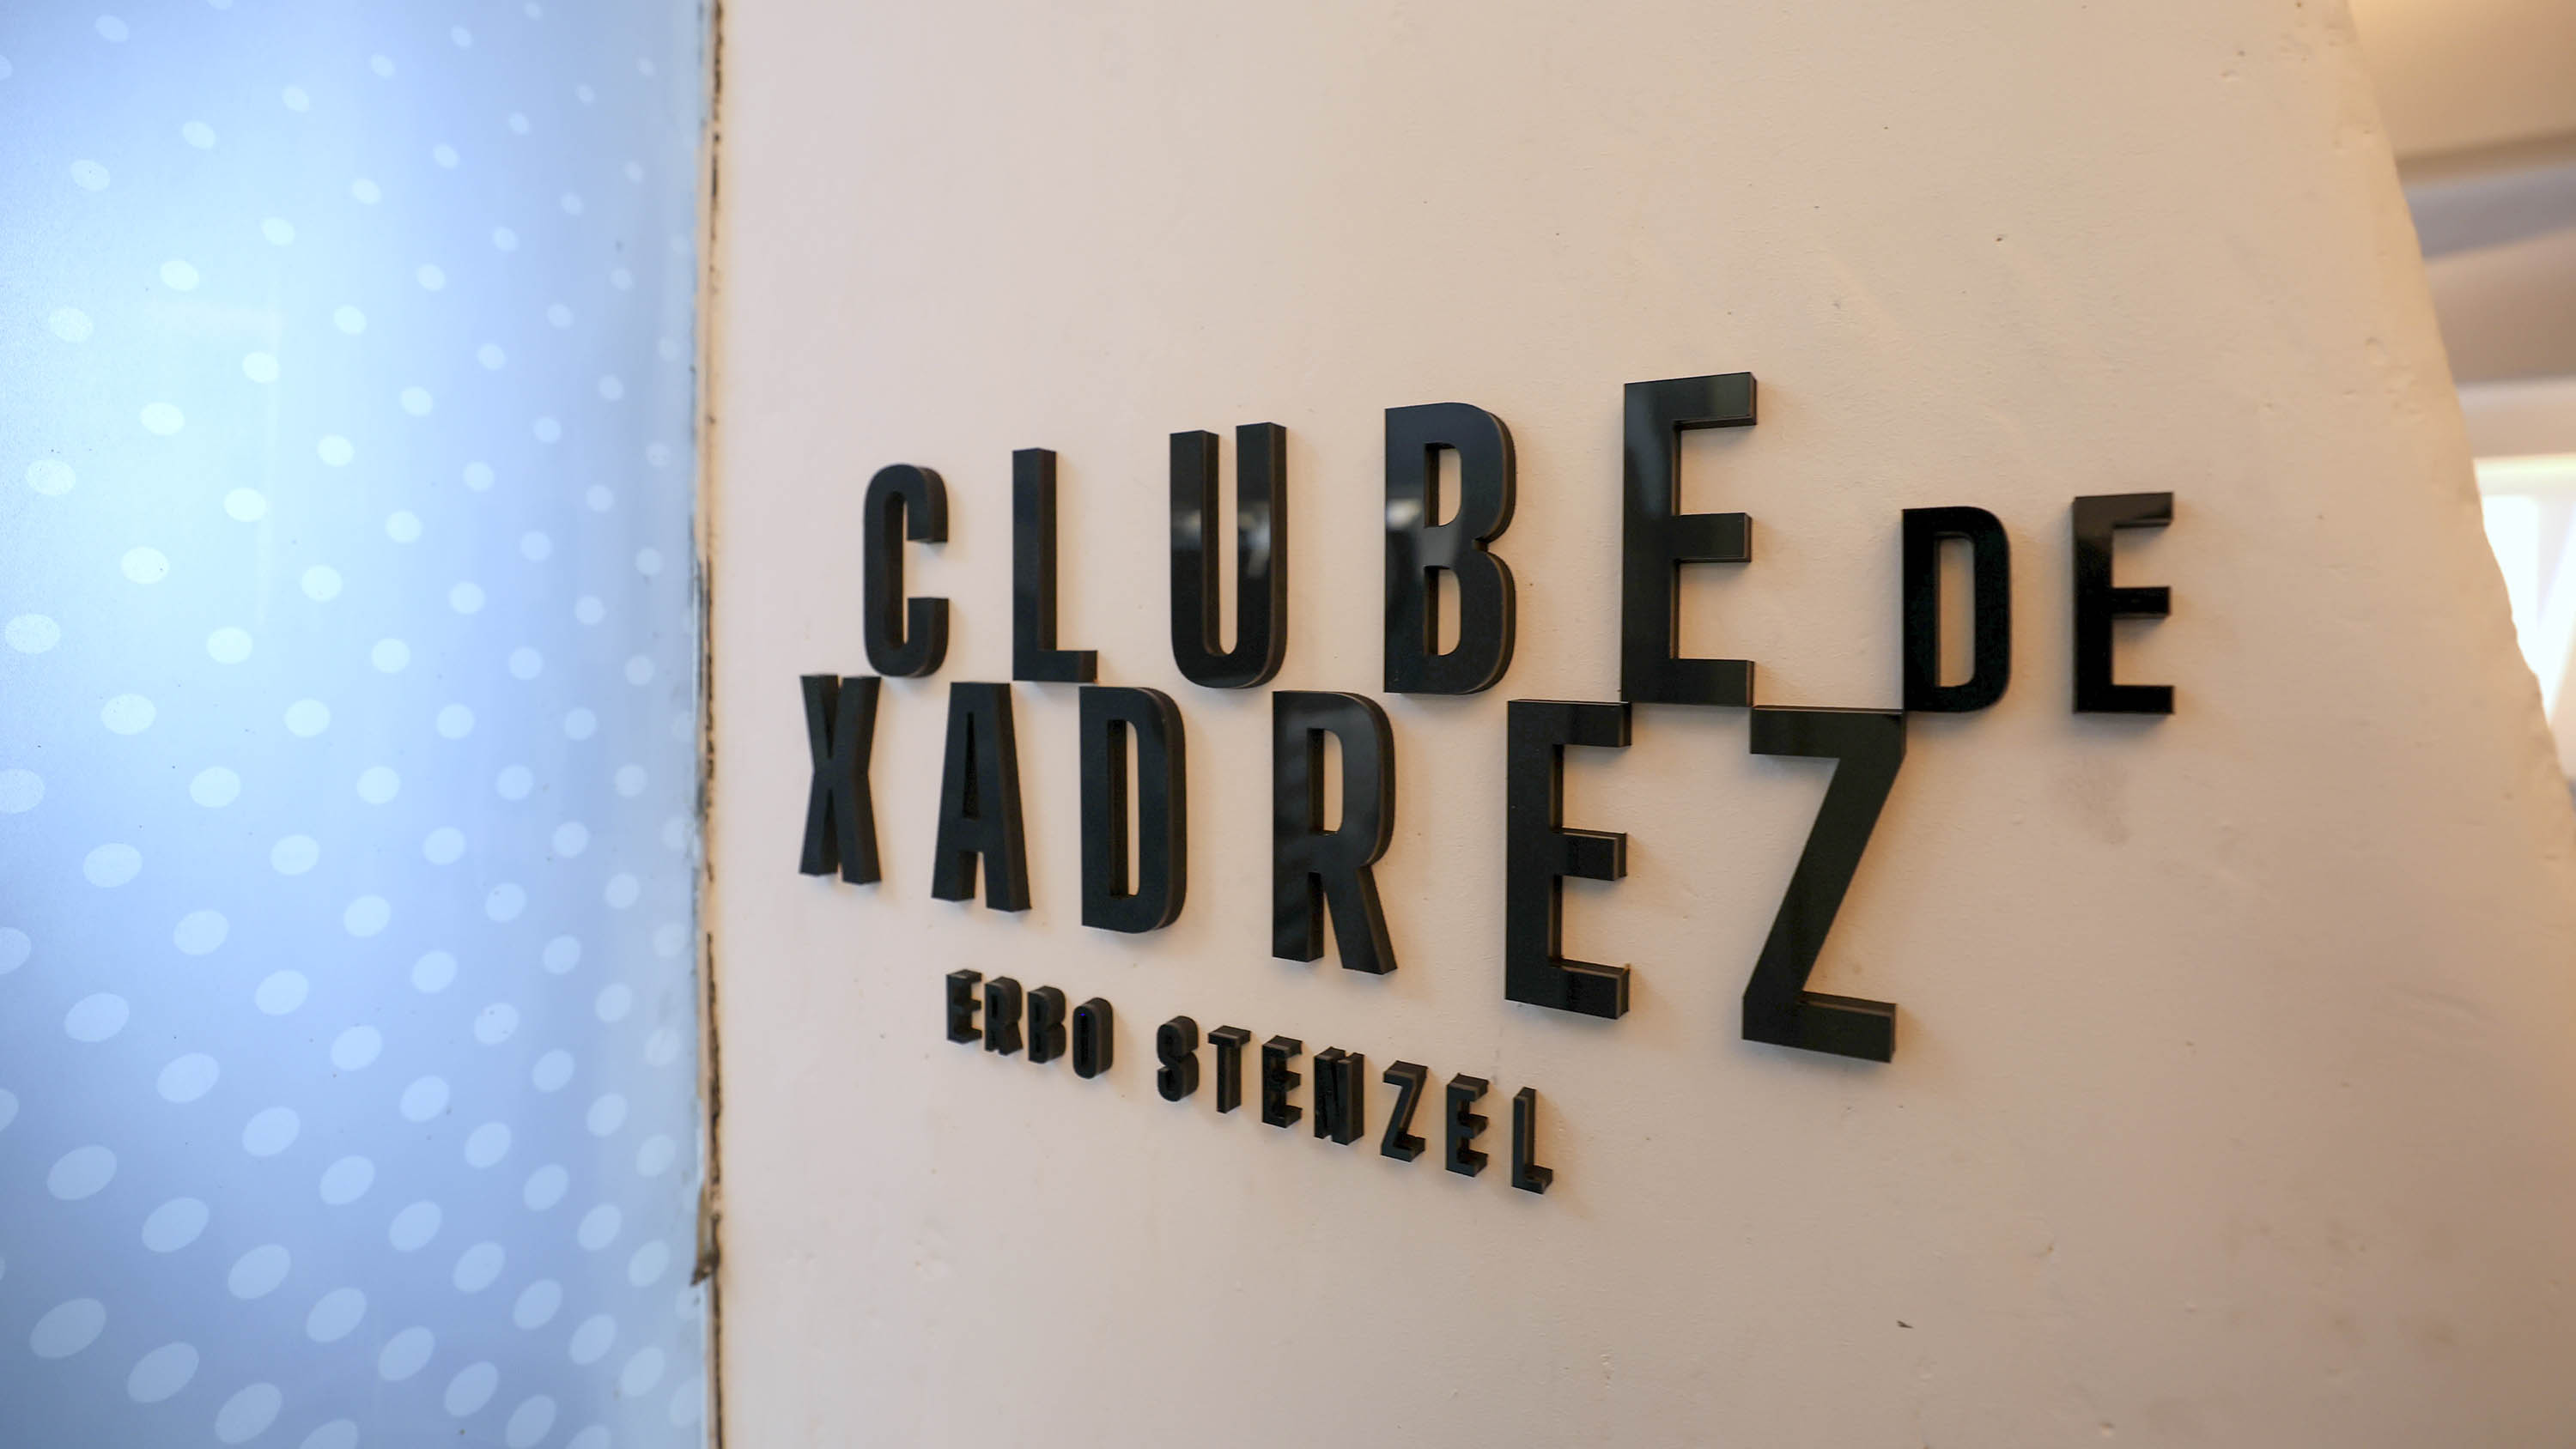 CLUBE DE XADREZ ONLINE DE IBIRITÉ •